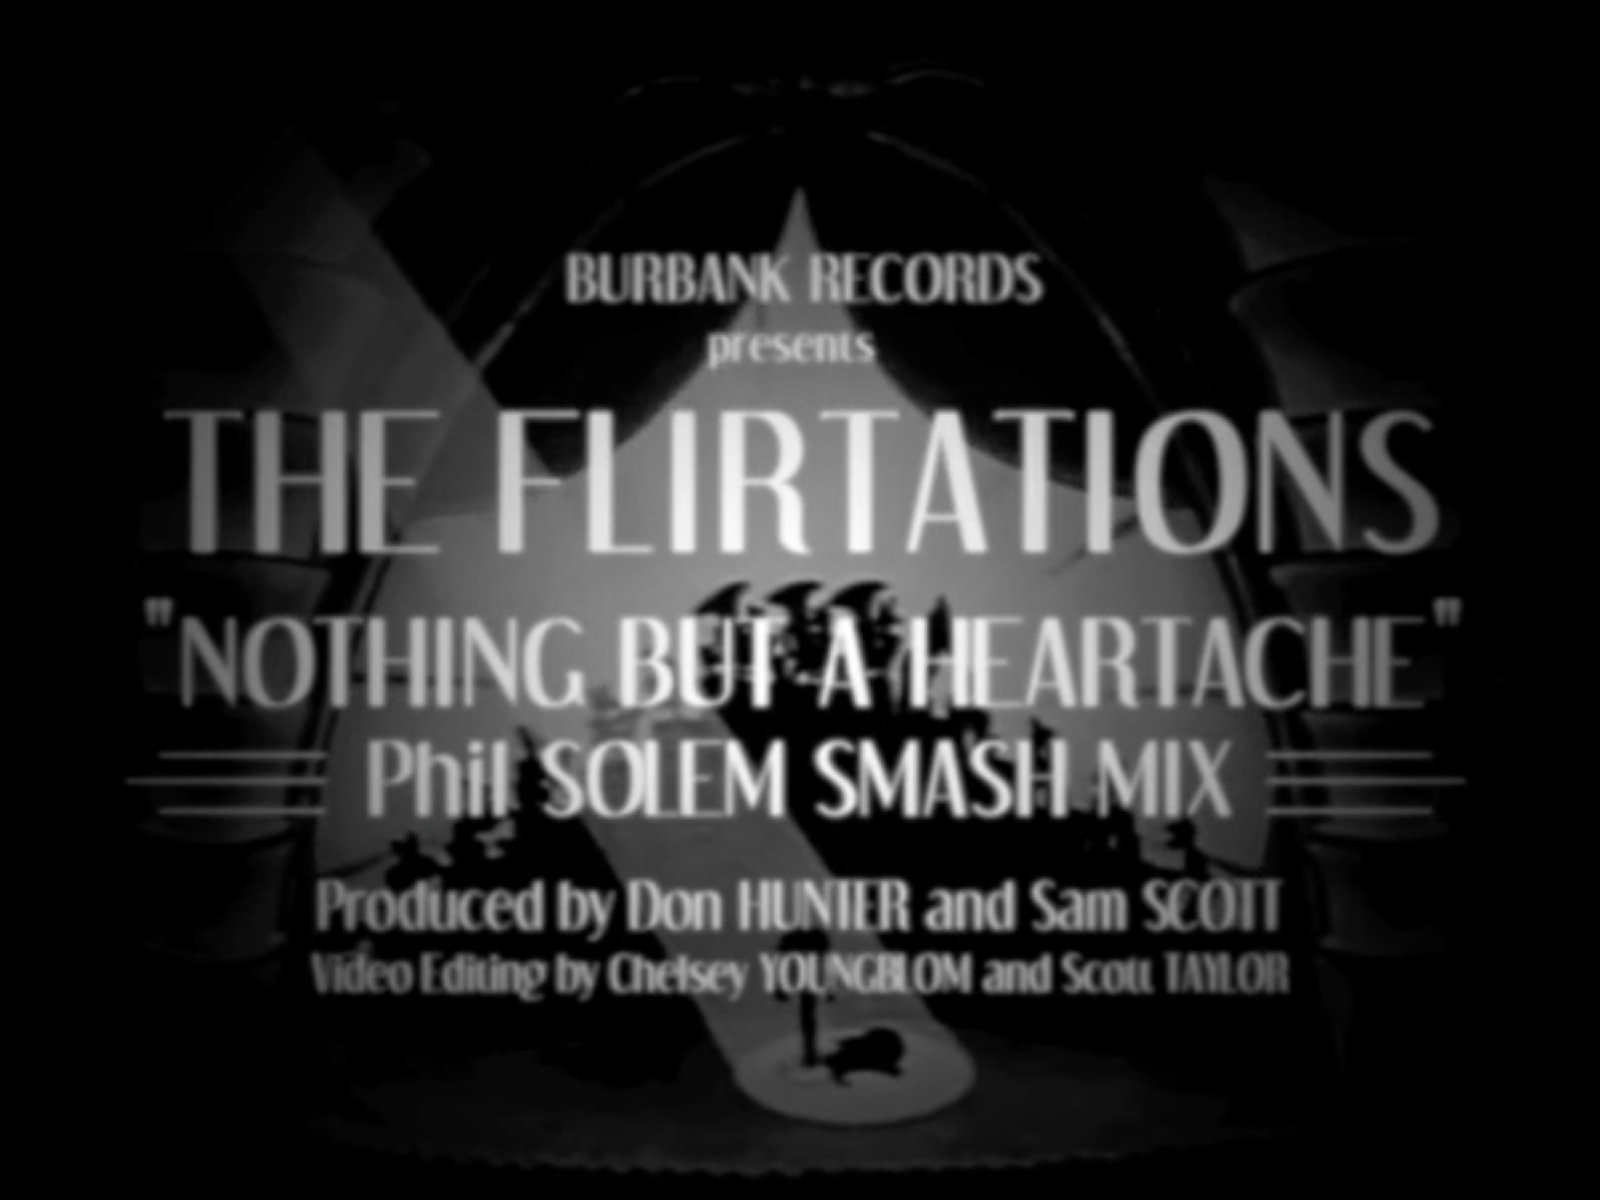 Phil Solem/The Flirtations